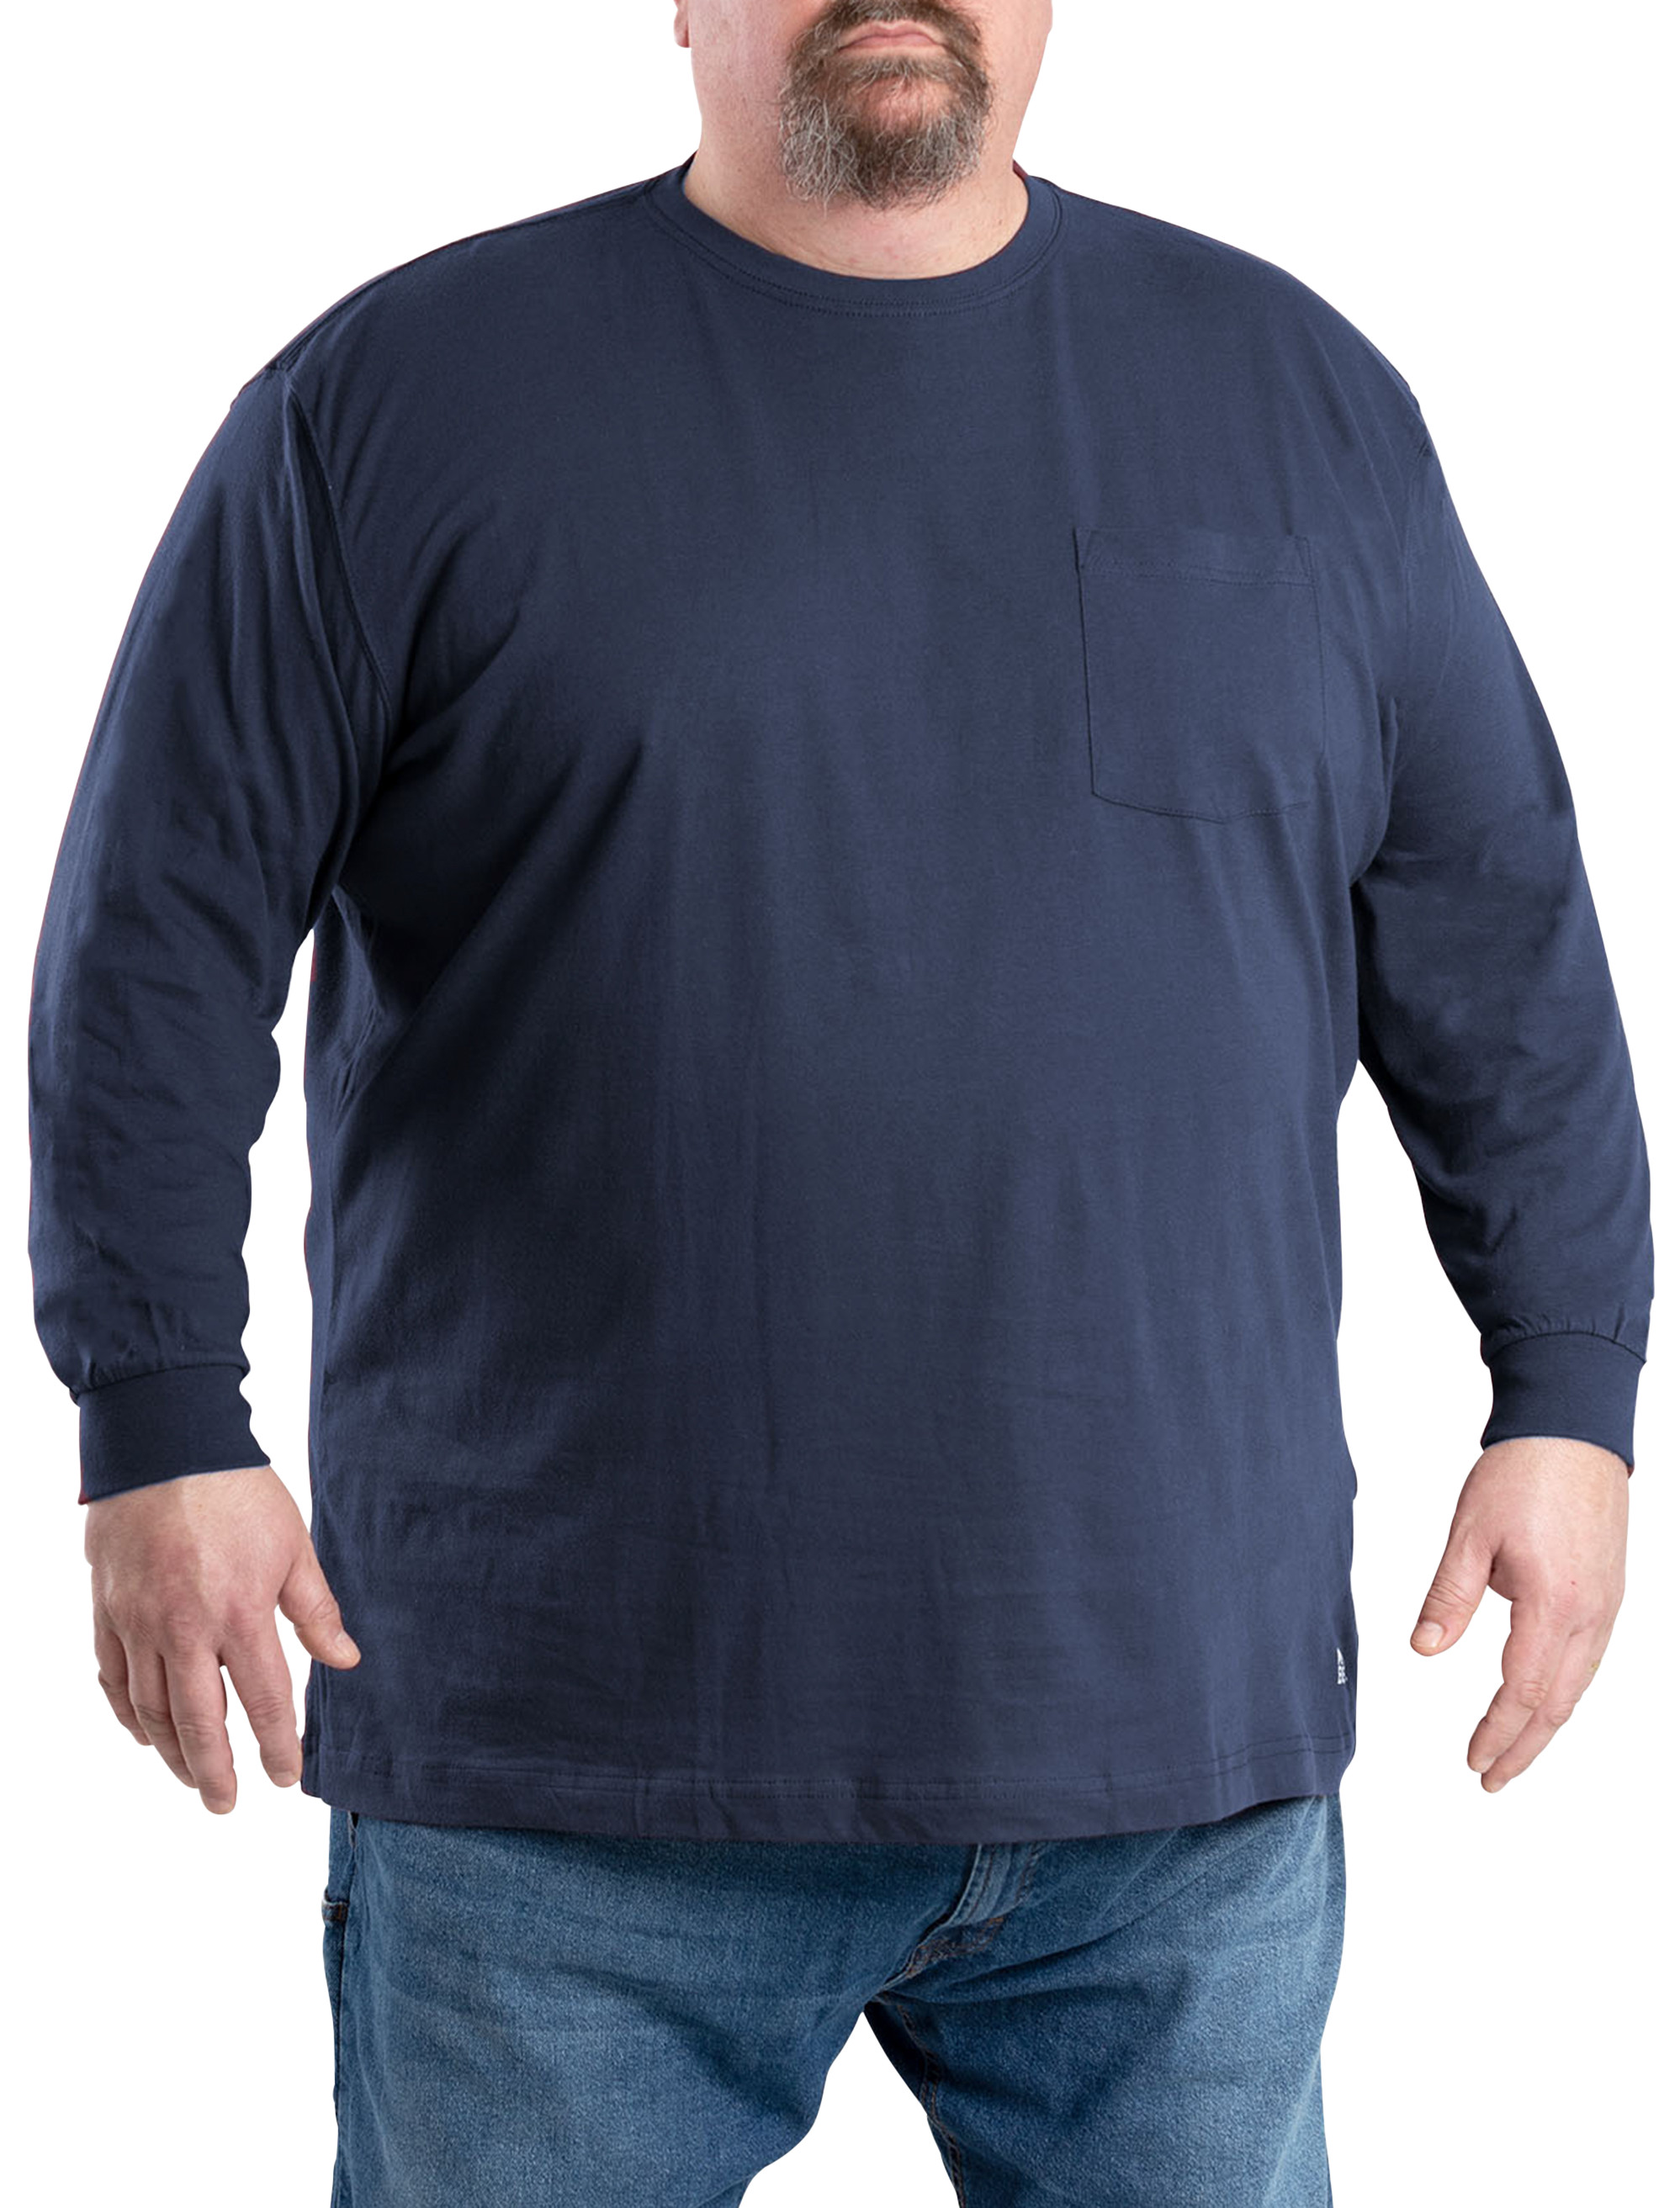 Berne Men's Heavyweight Long Sleeve Pocket T-Shirt, Black, XL